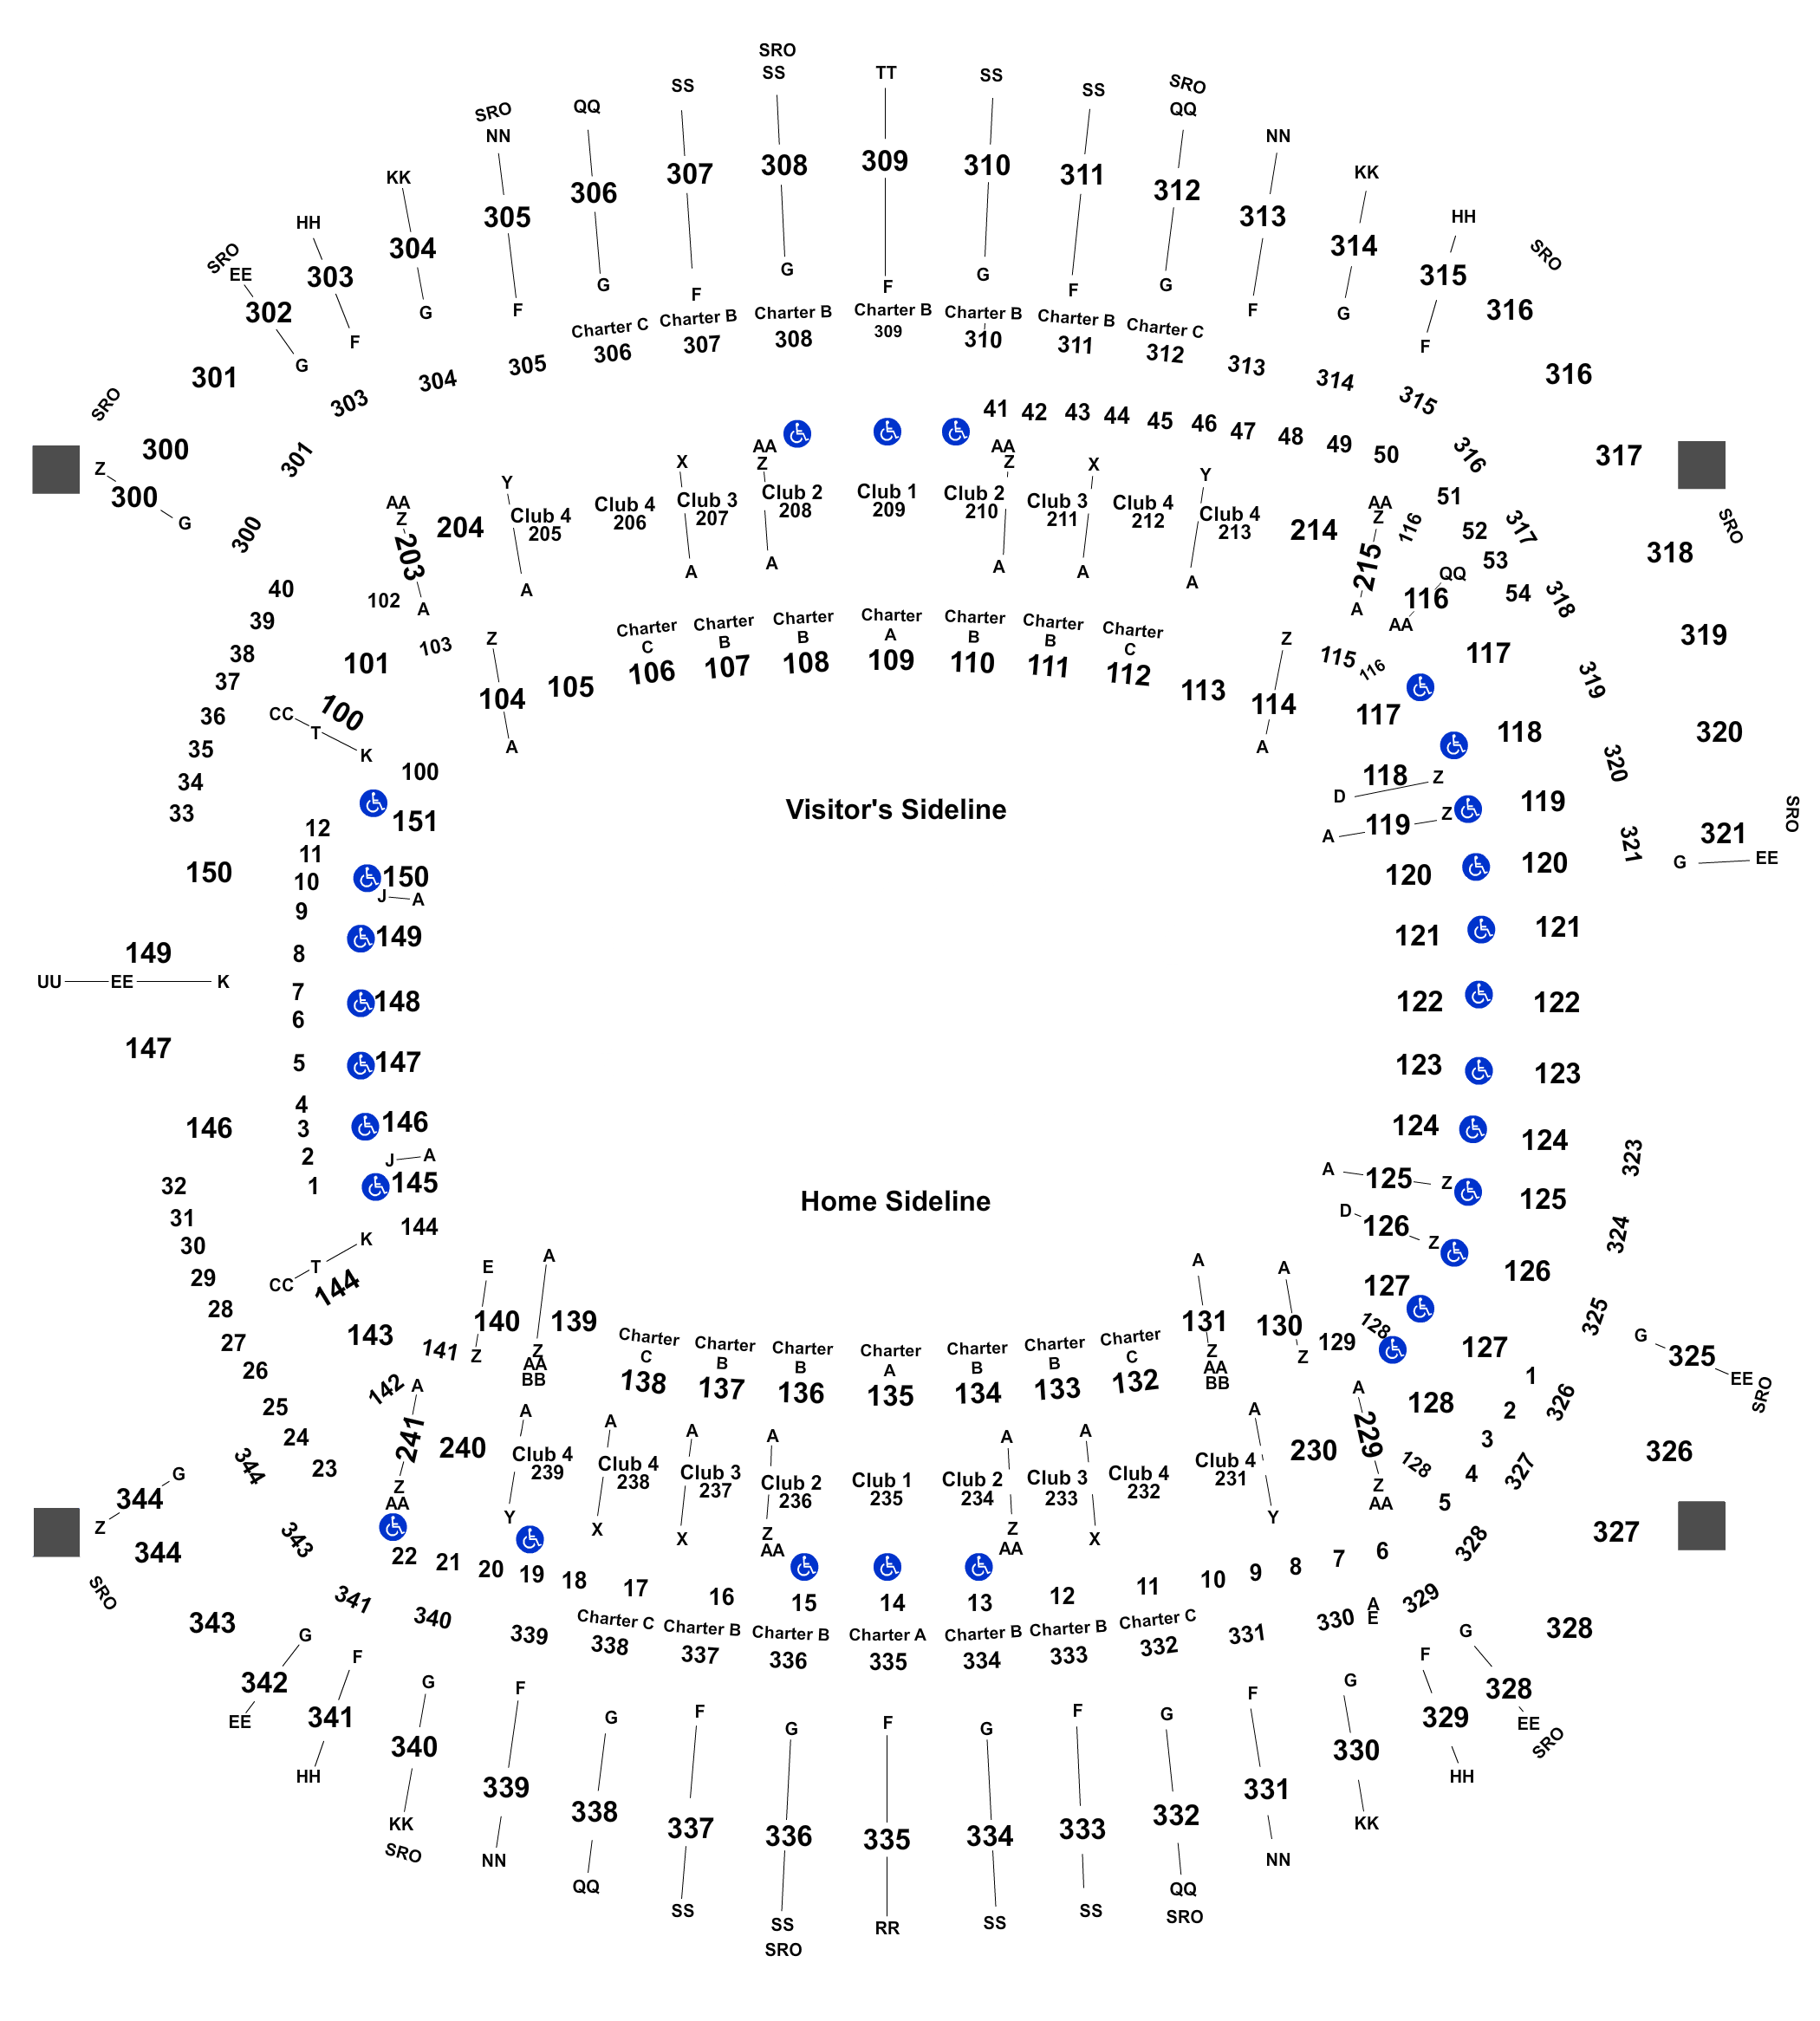 Seahawks Stadium Interactive Seating Chart